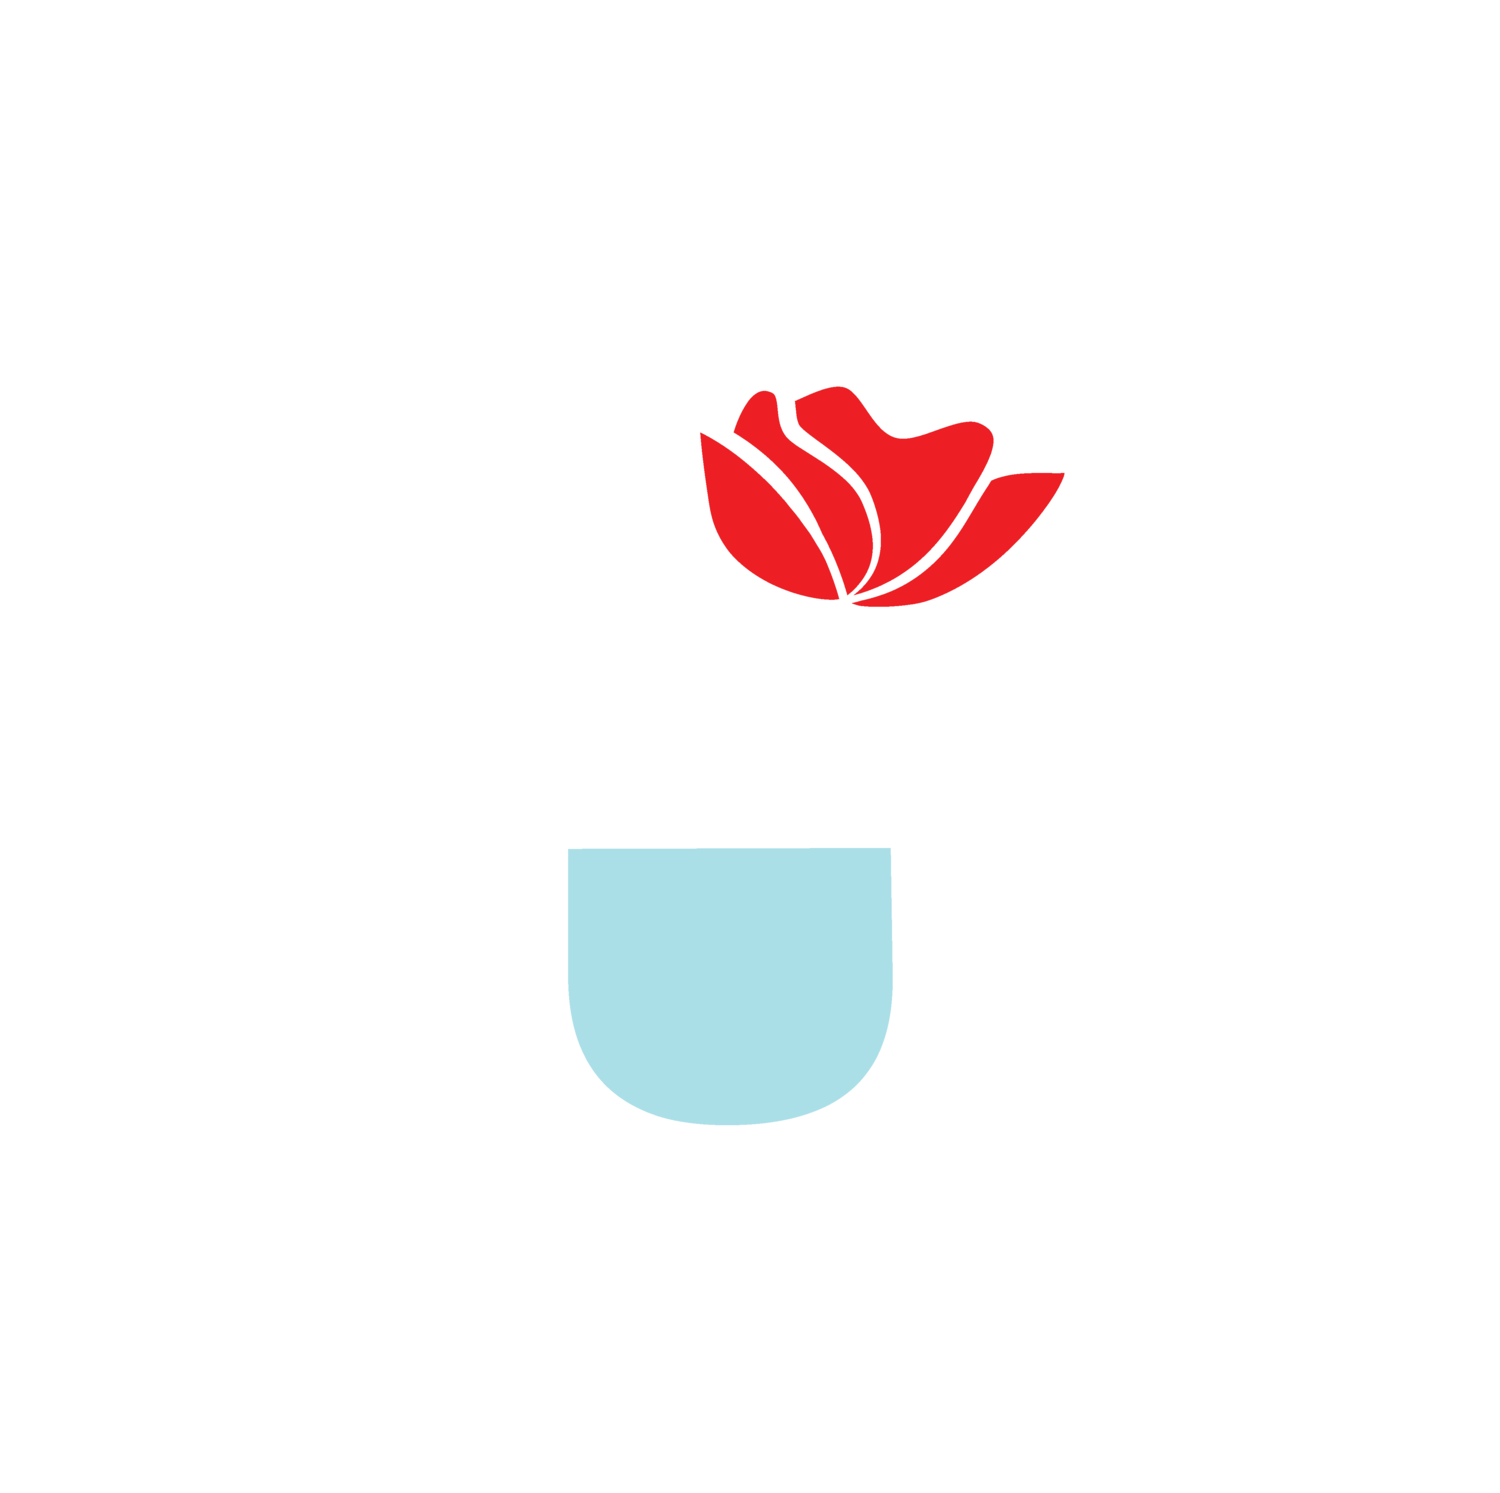 Rowan Tree 